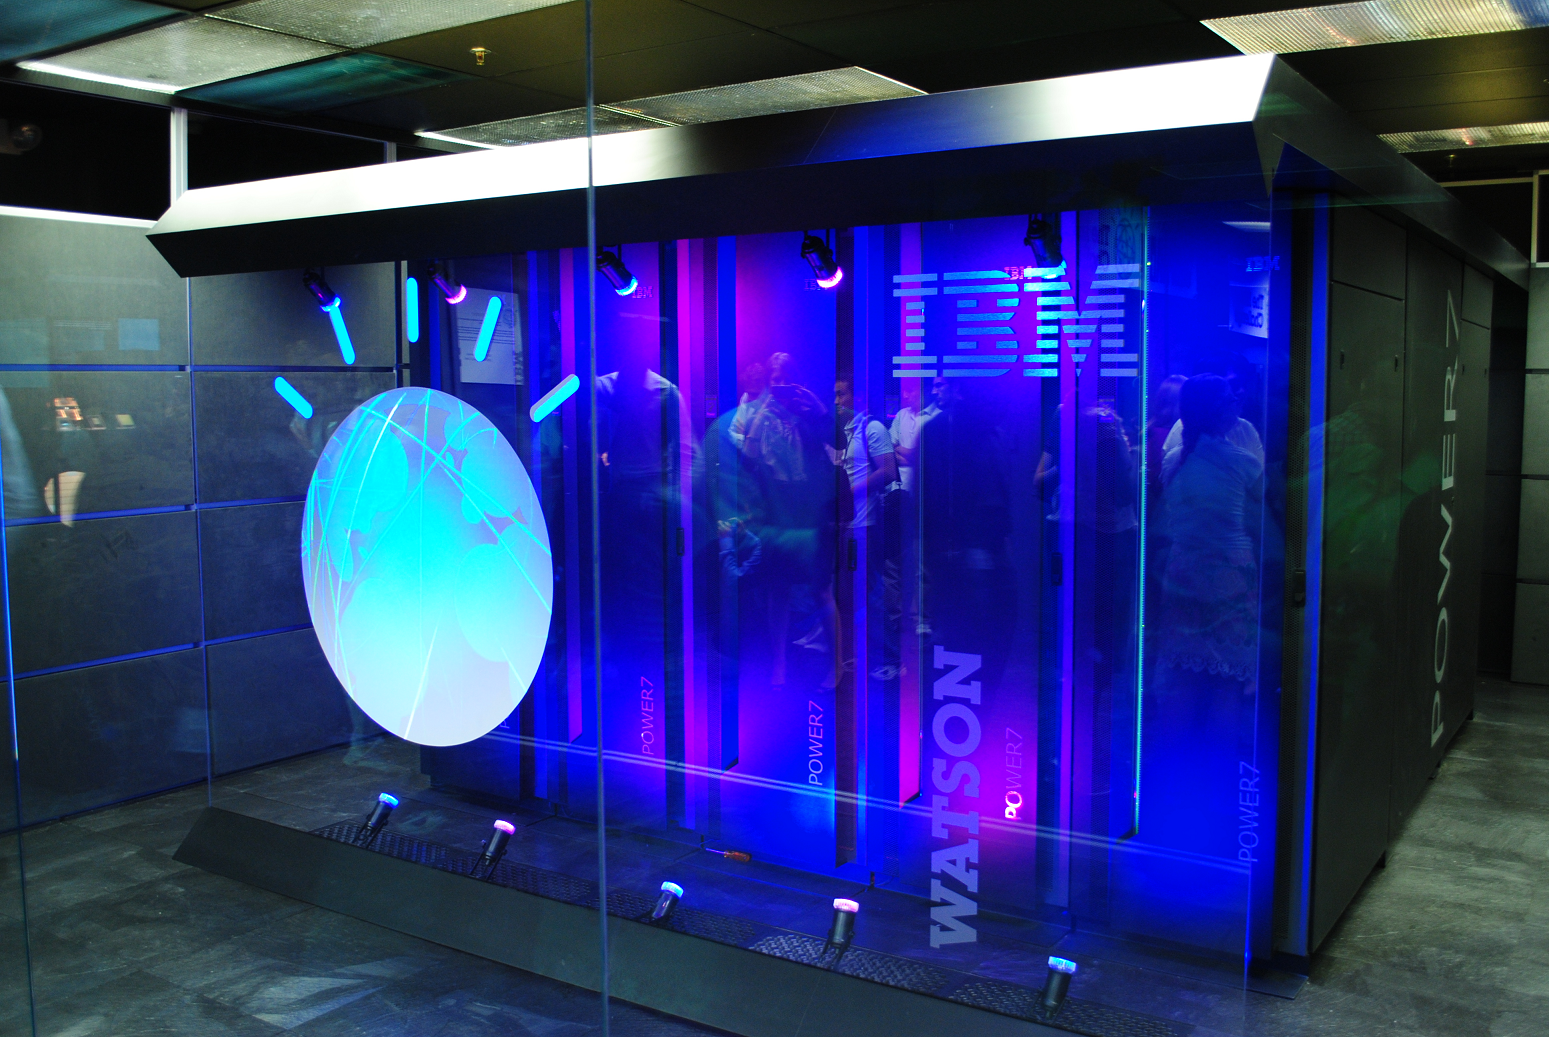 IBM Watson computer